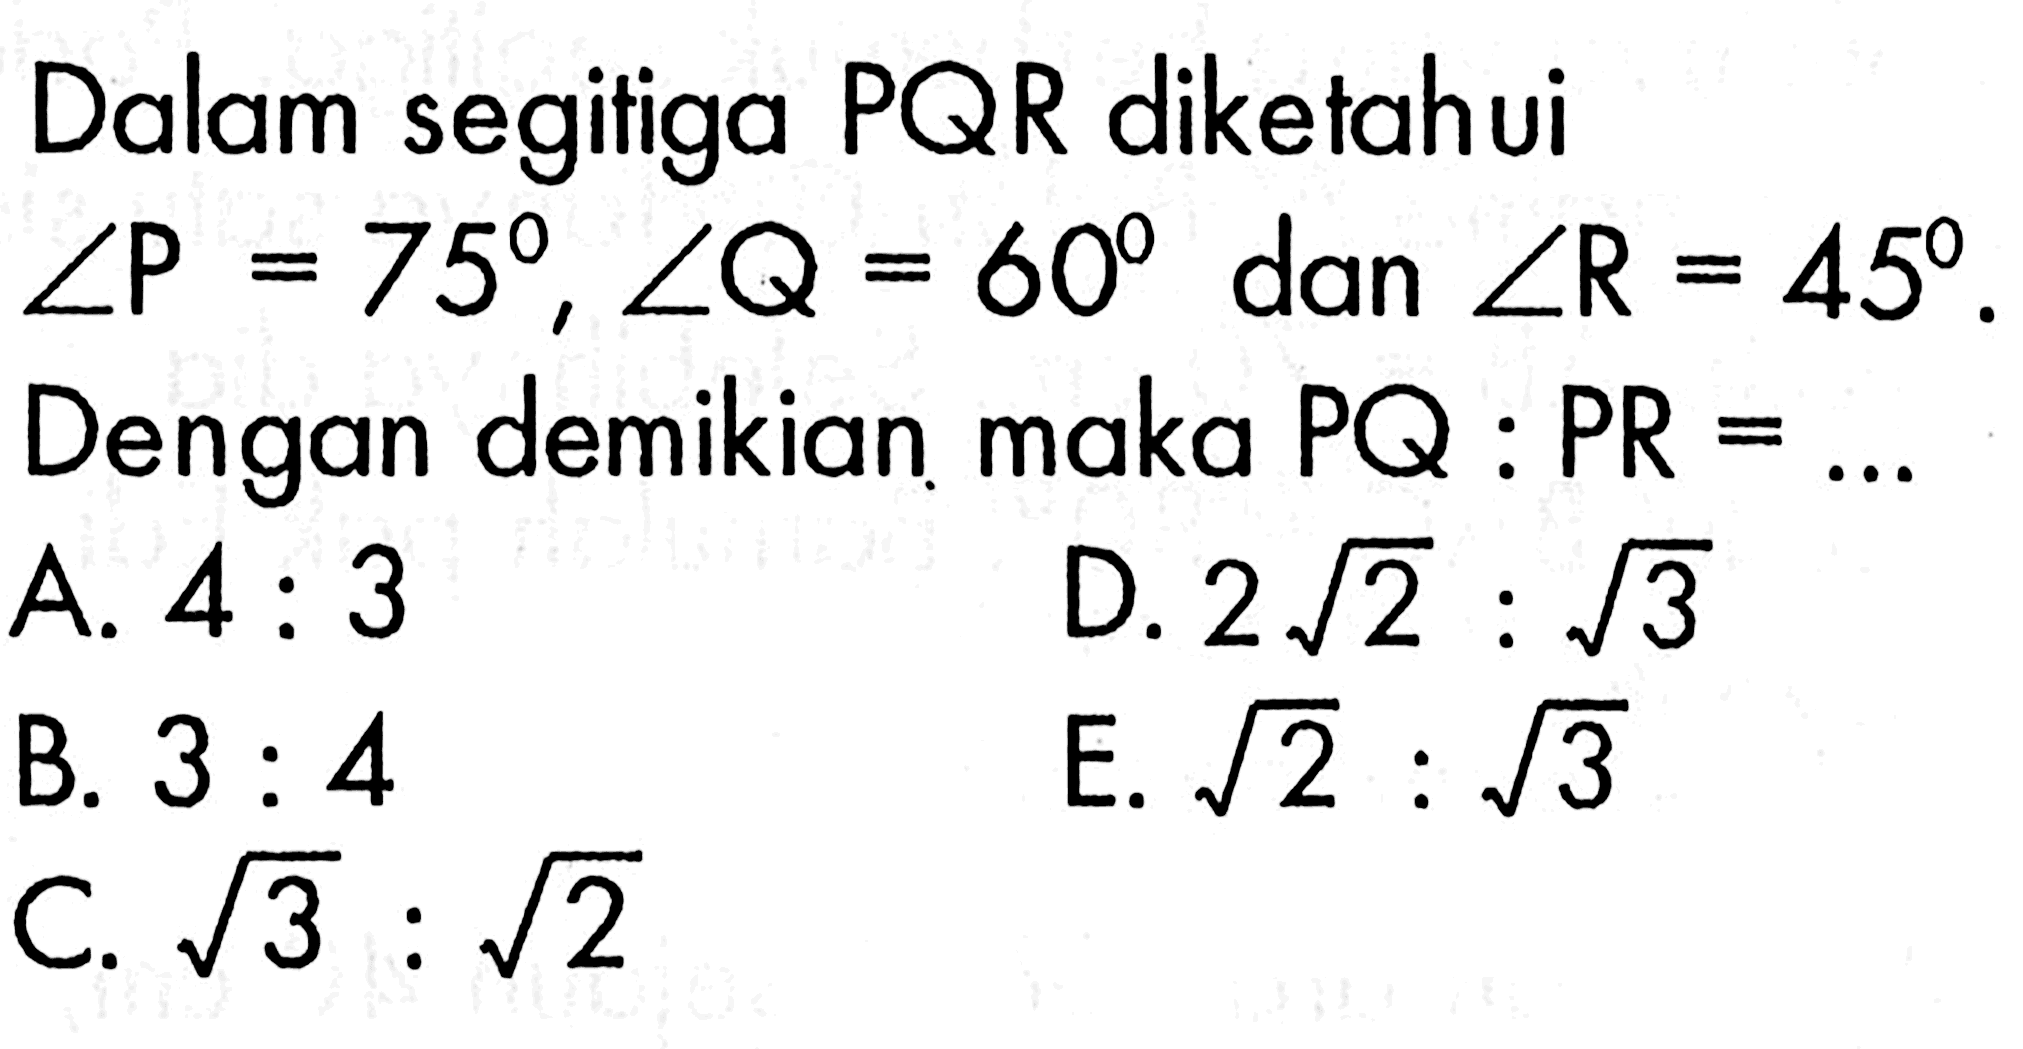 Dalam segifiga PQR diketahui sudut P=75, sudut Q=60 dan sudut R=45. Dengan demikian maka PQ:PR= ...